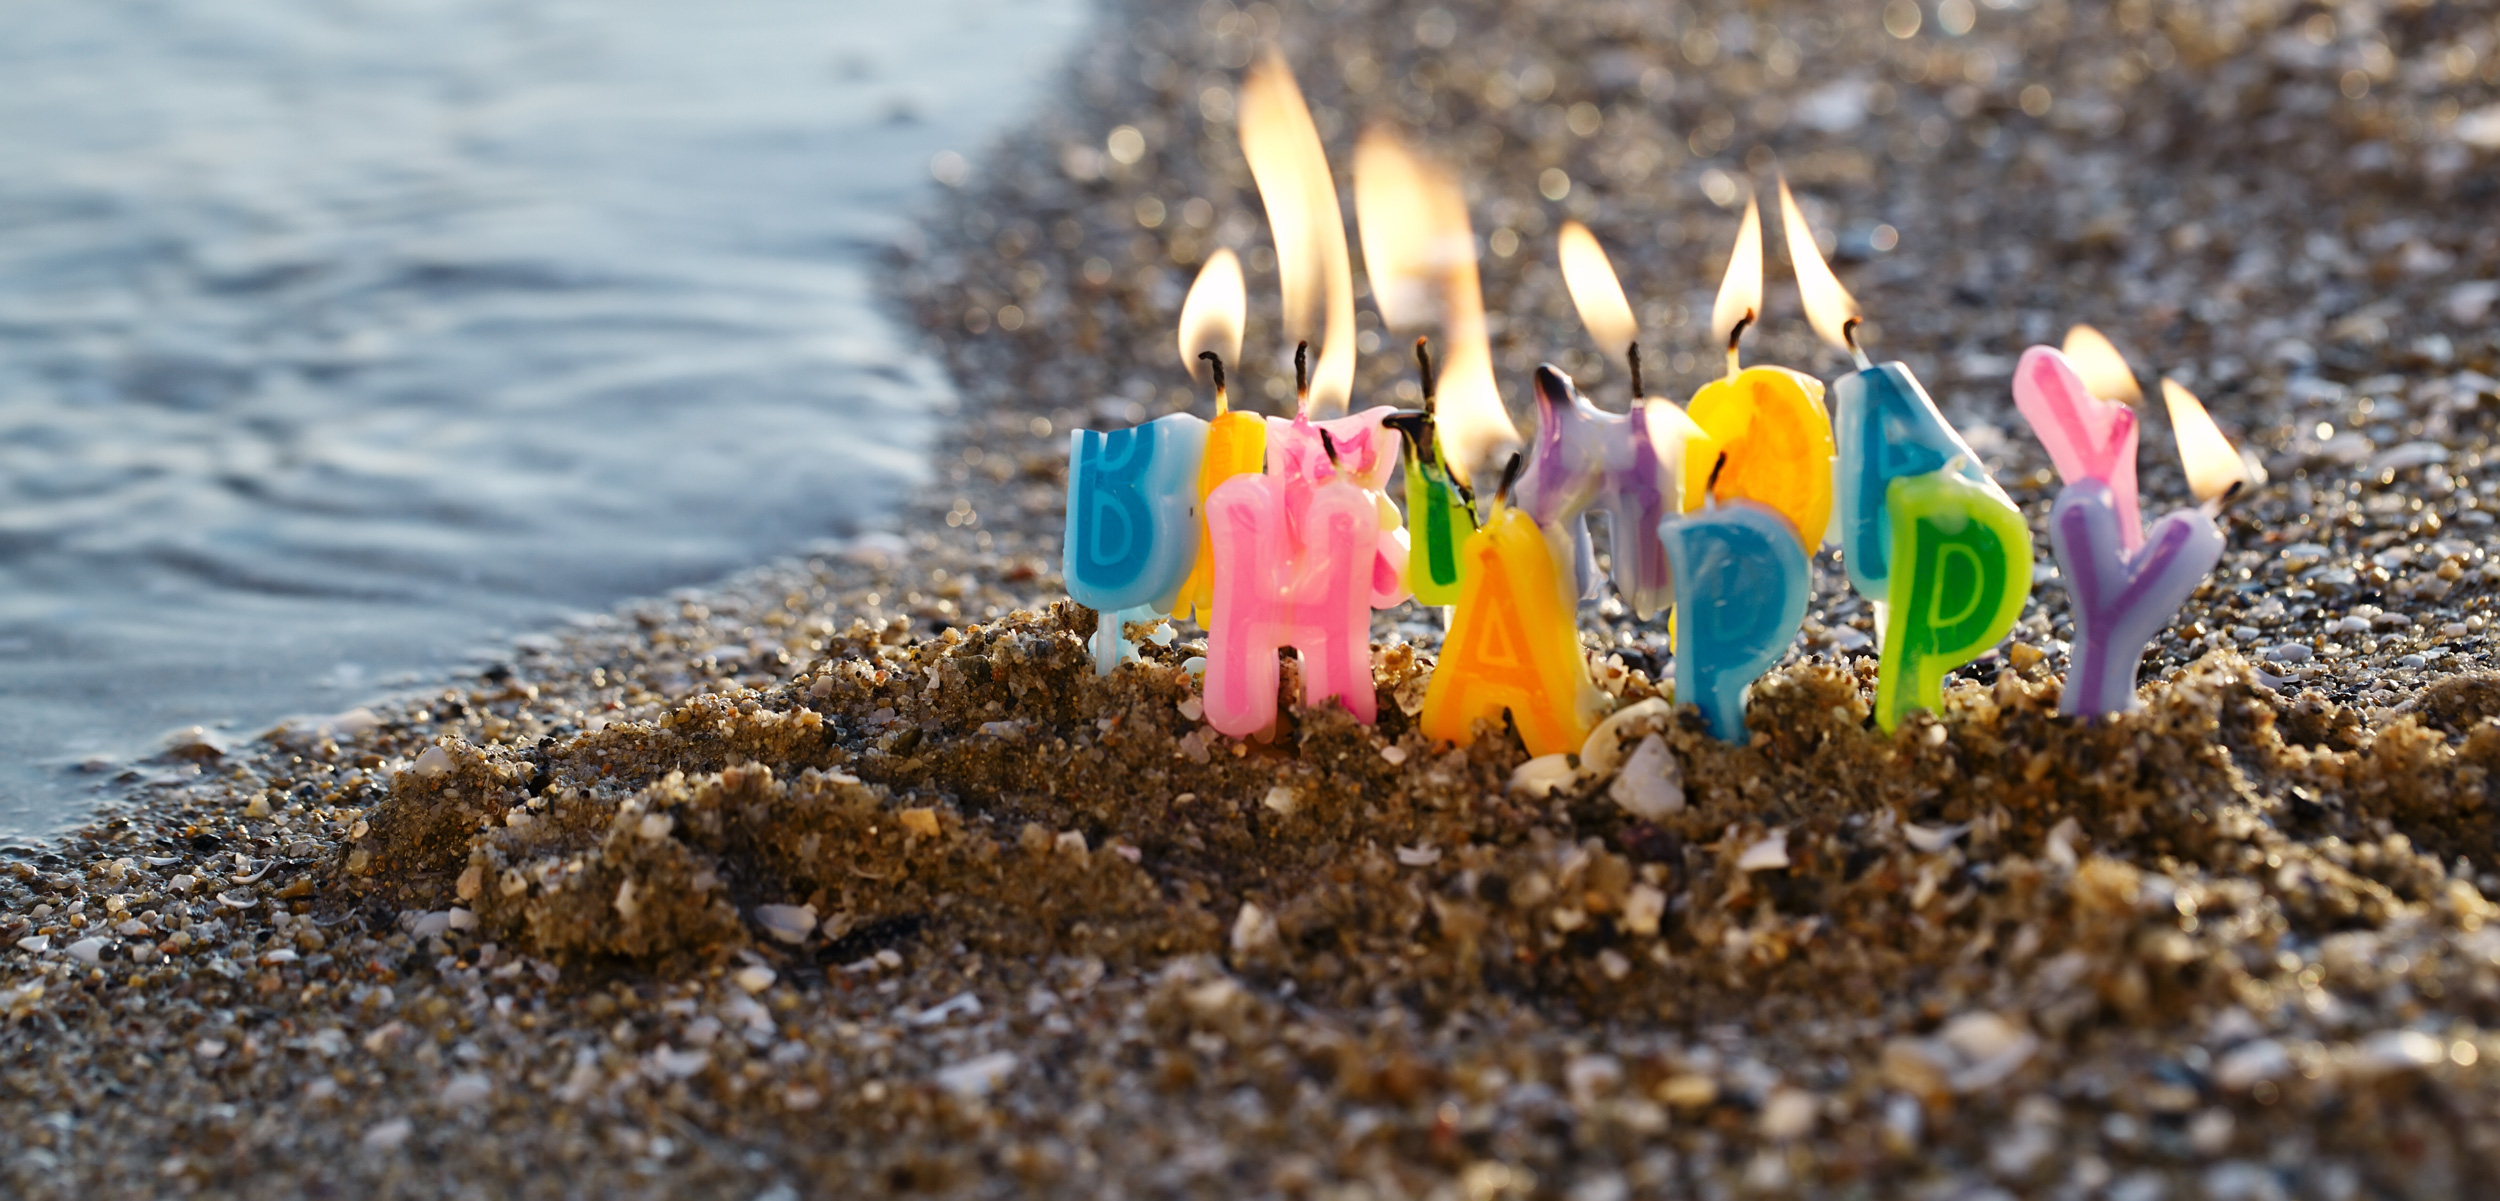 birthday candles on the beach